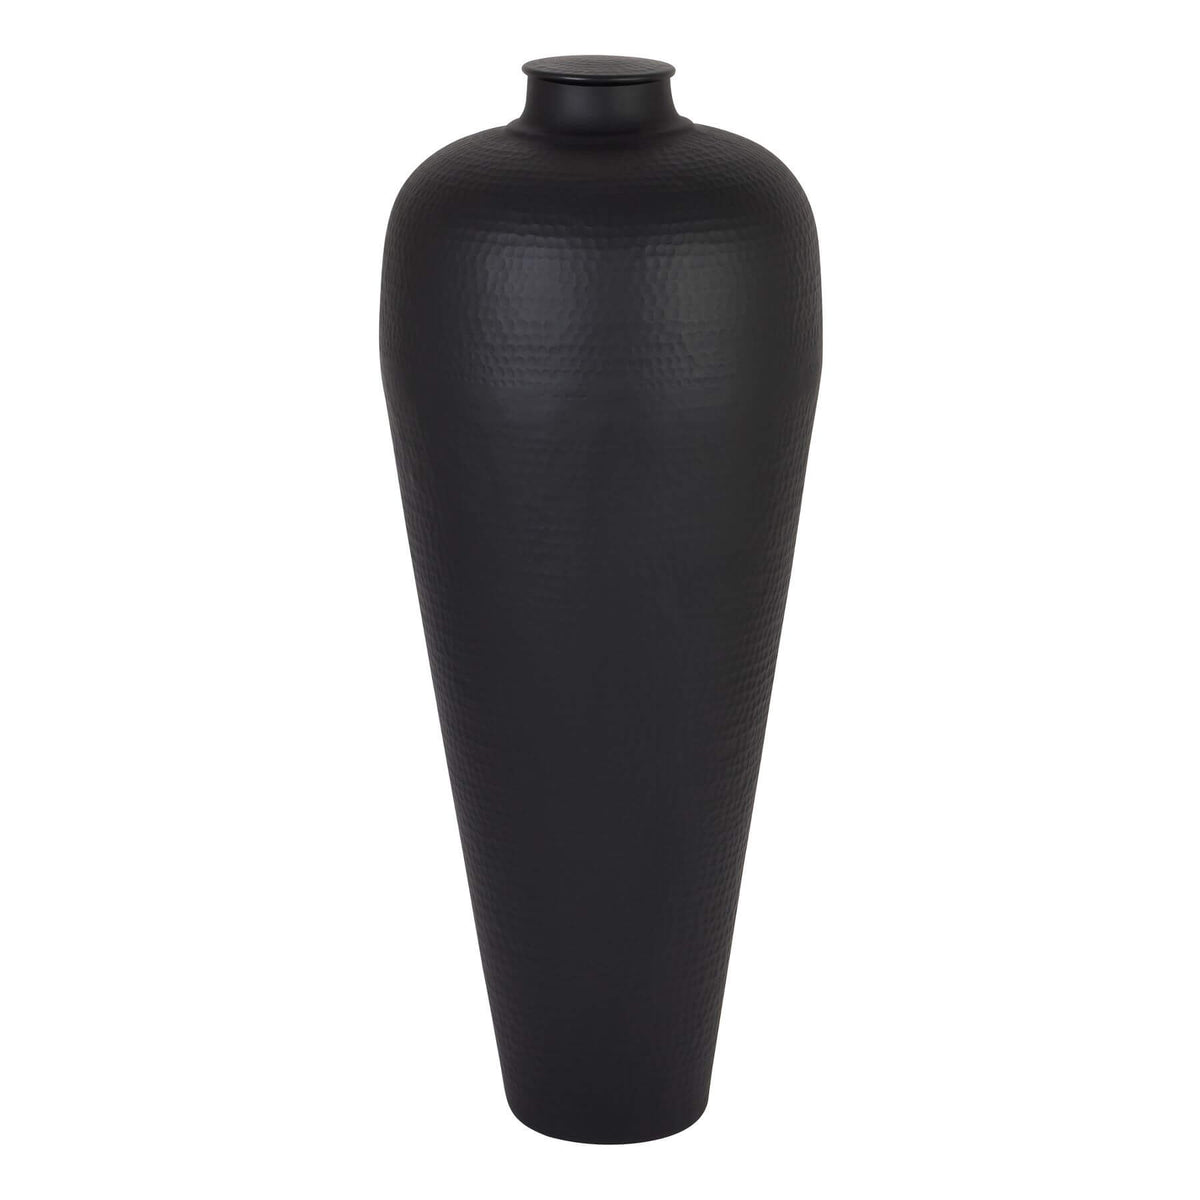 matt black vase black home accessories london uk black floor vase